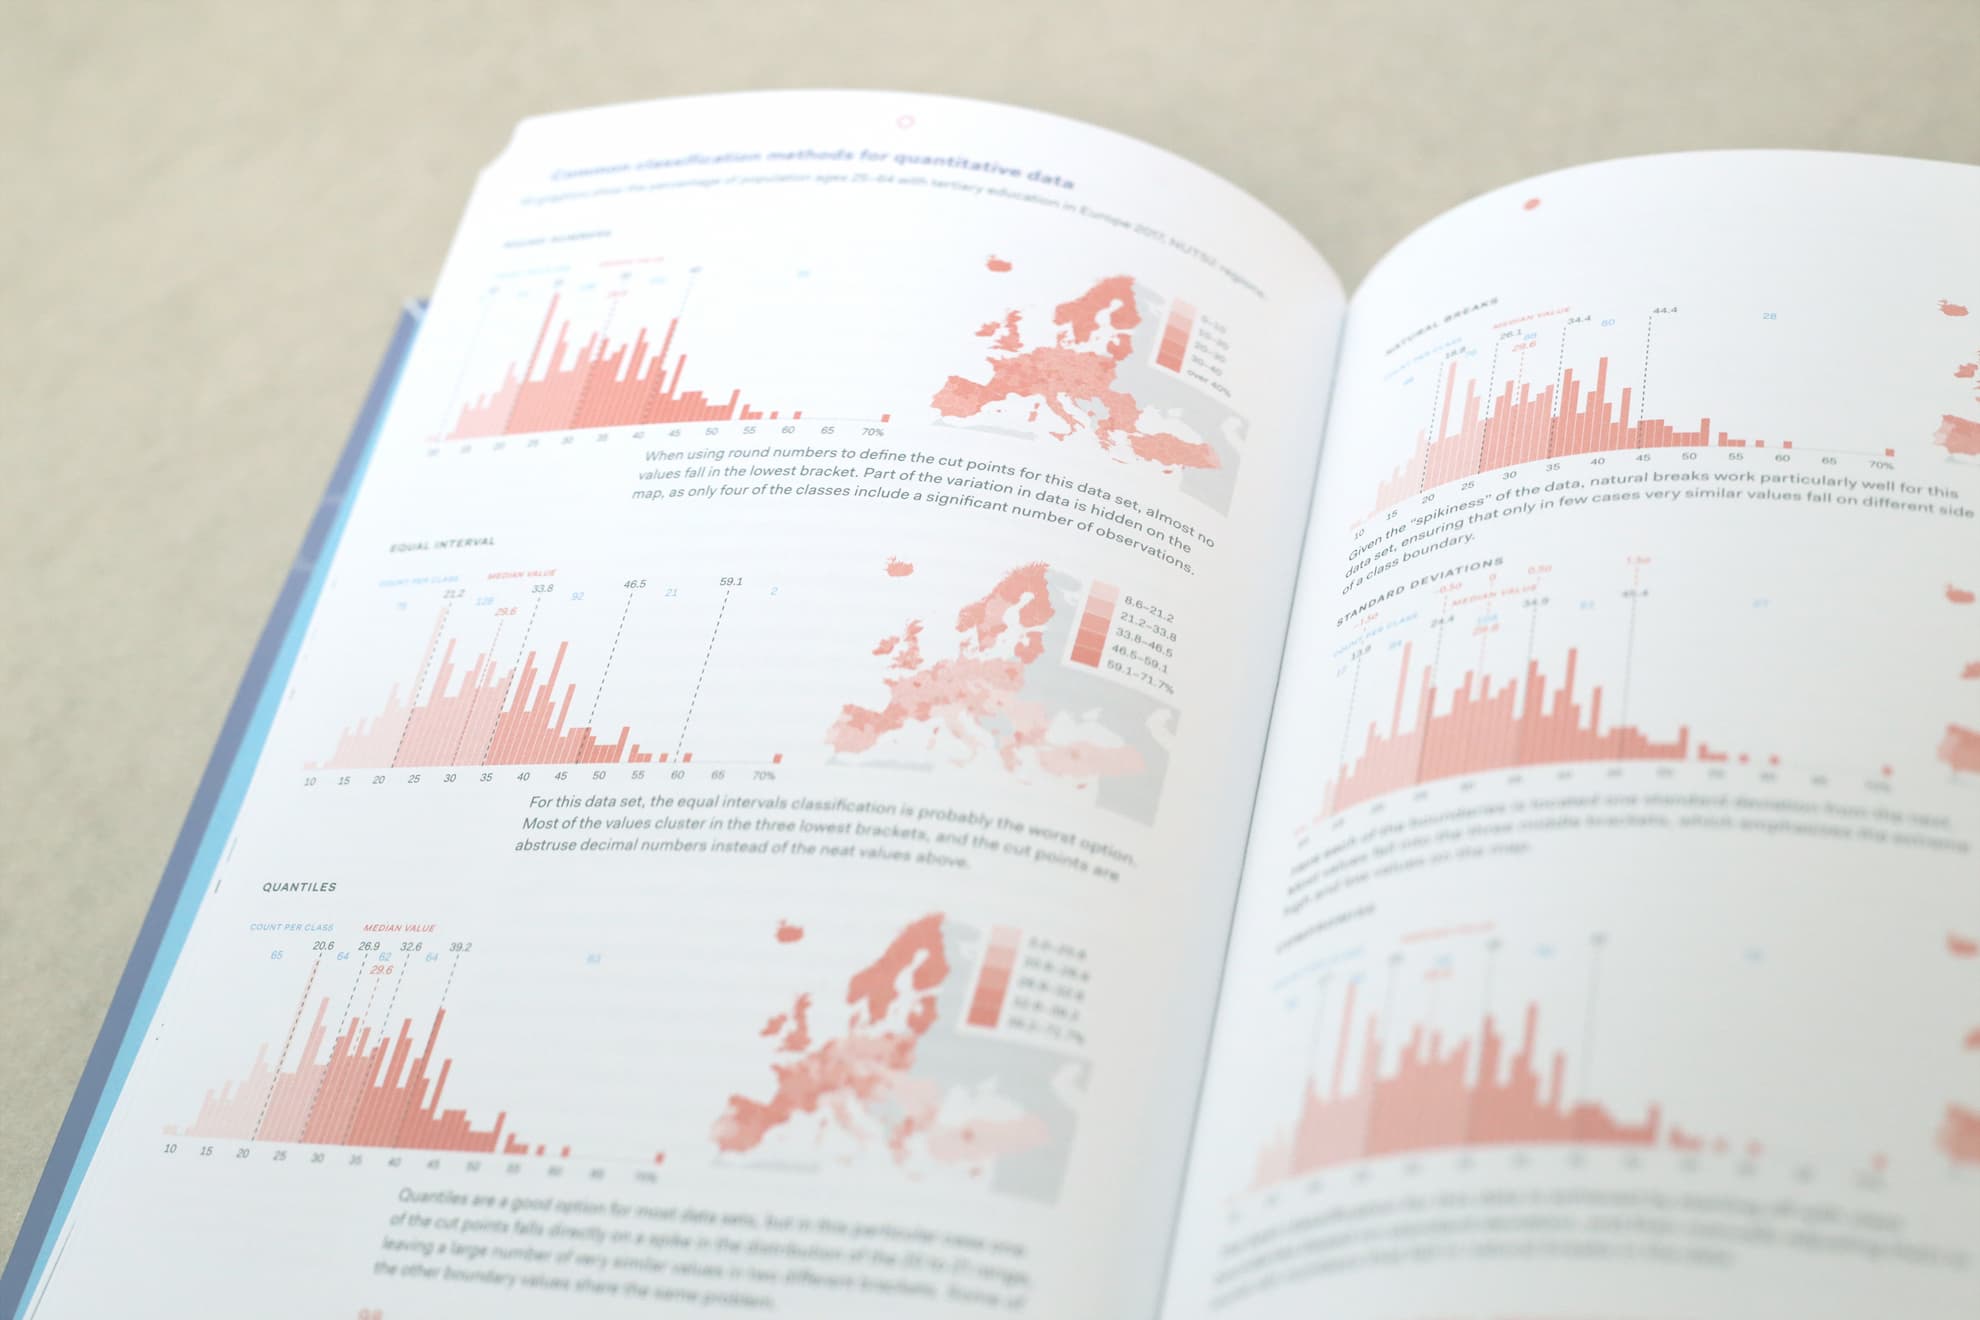 macro shot of book spread showing multiple histograms